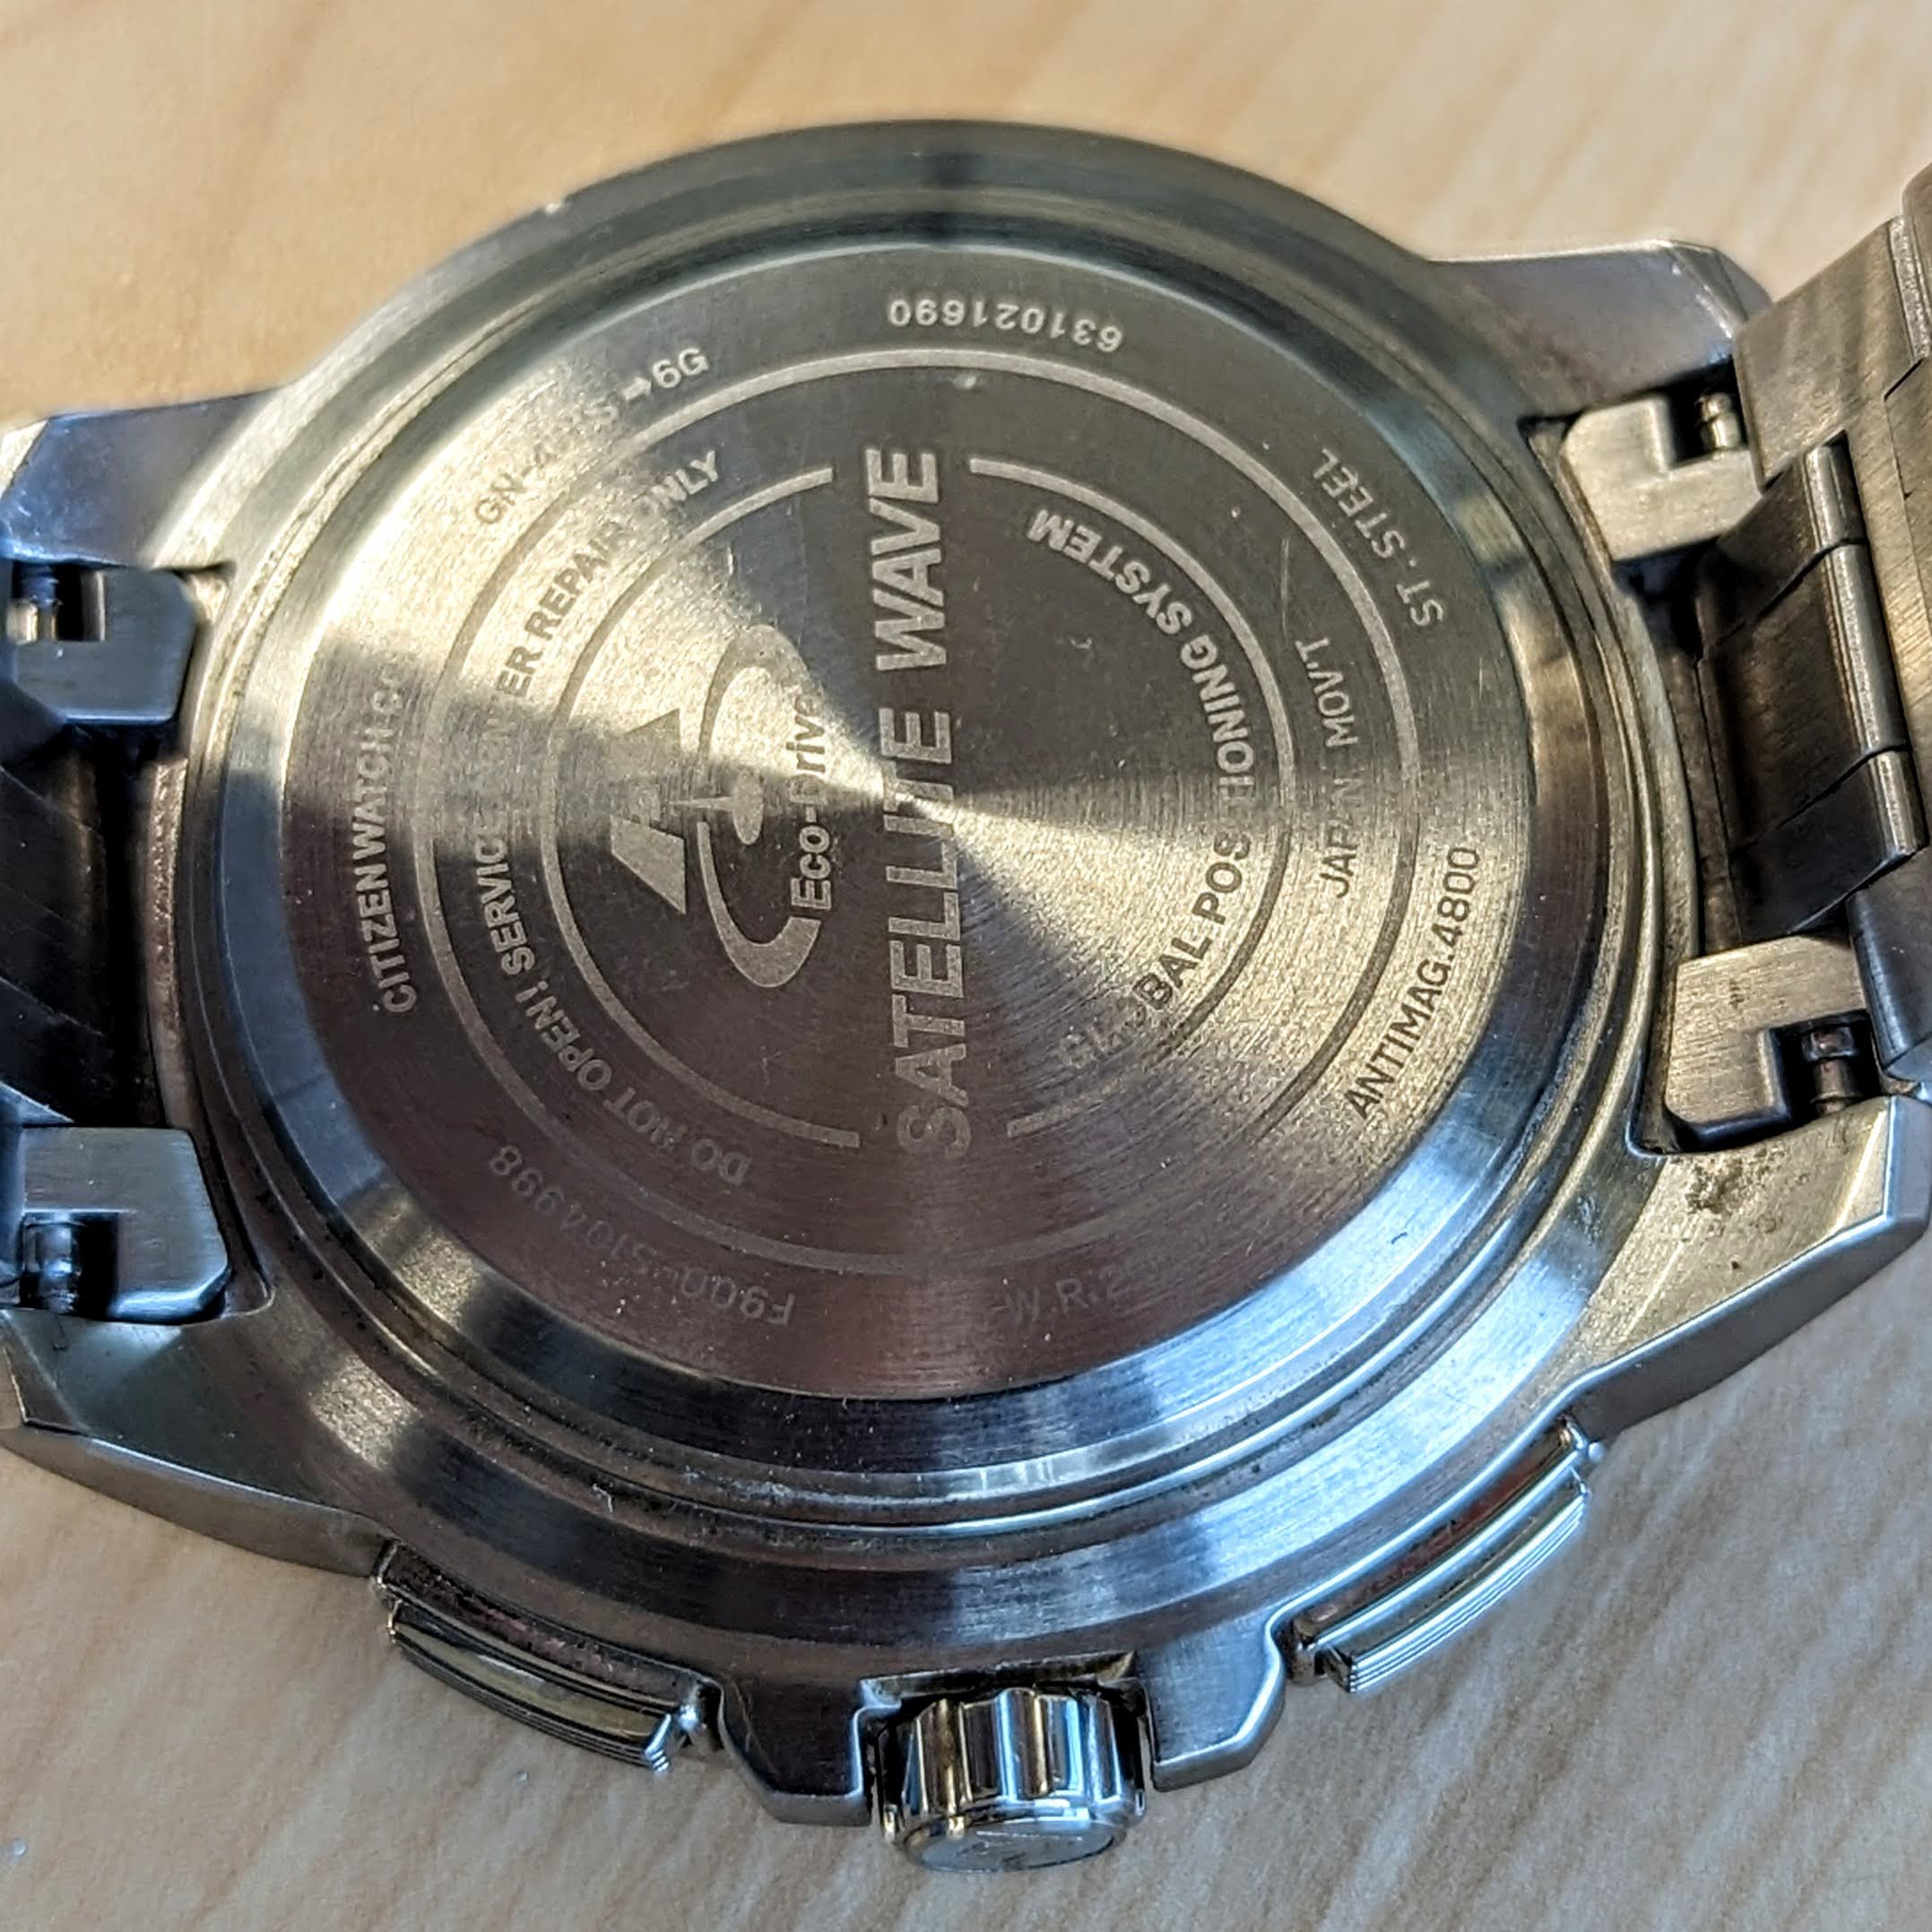 CITIZEN Promaster Navihawk GPS Satellite Wave Wristwatch Eco-Drive Chronograph Watch CC9030-51E